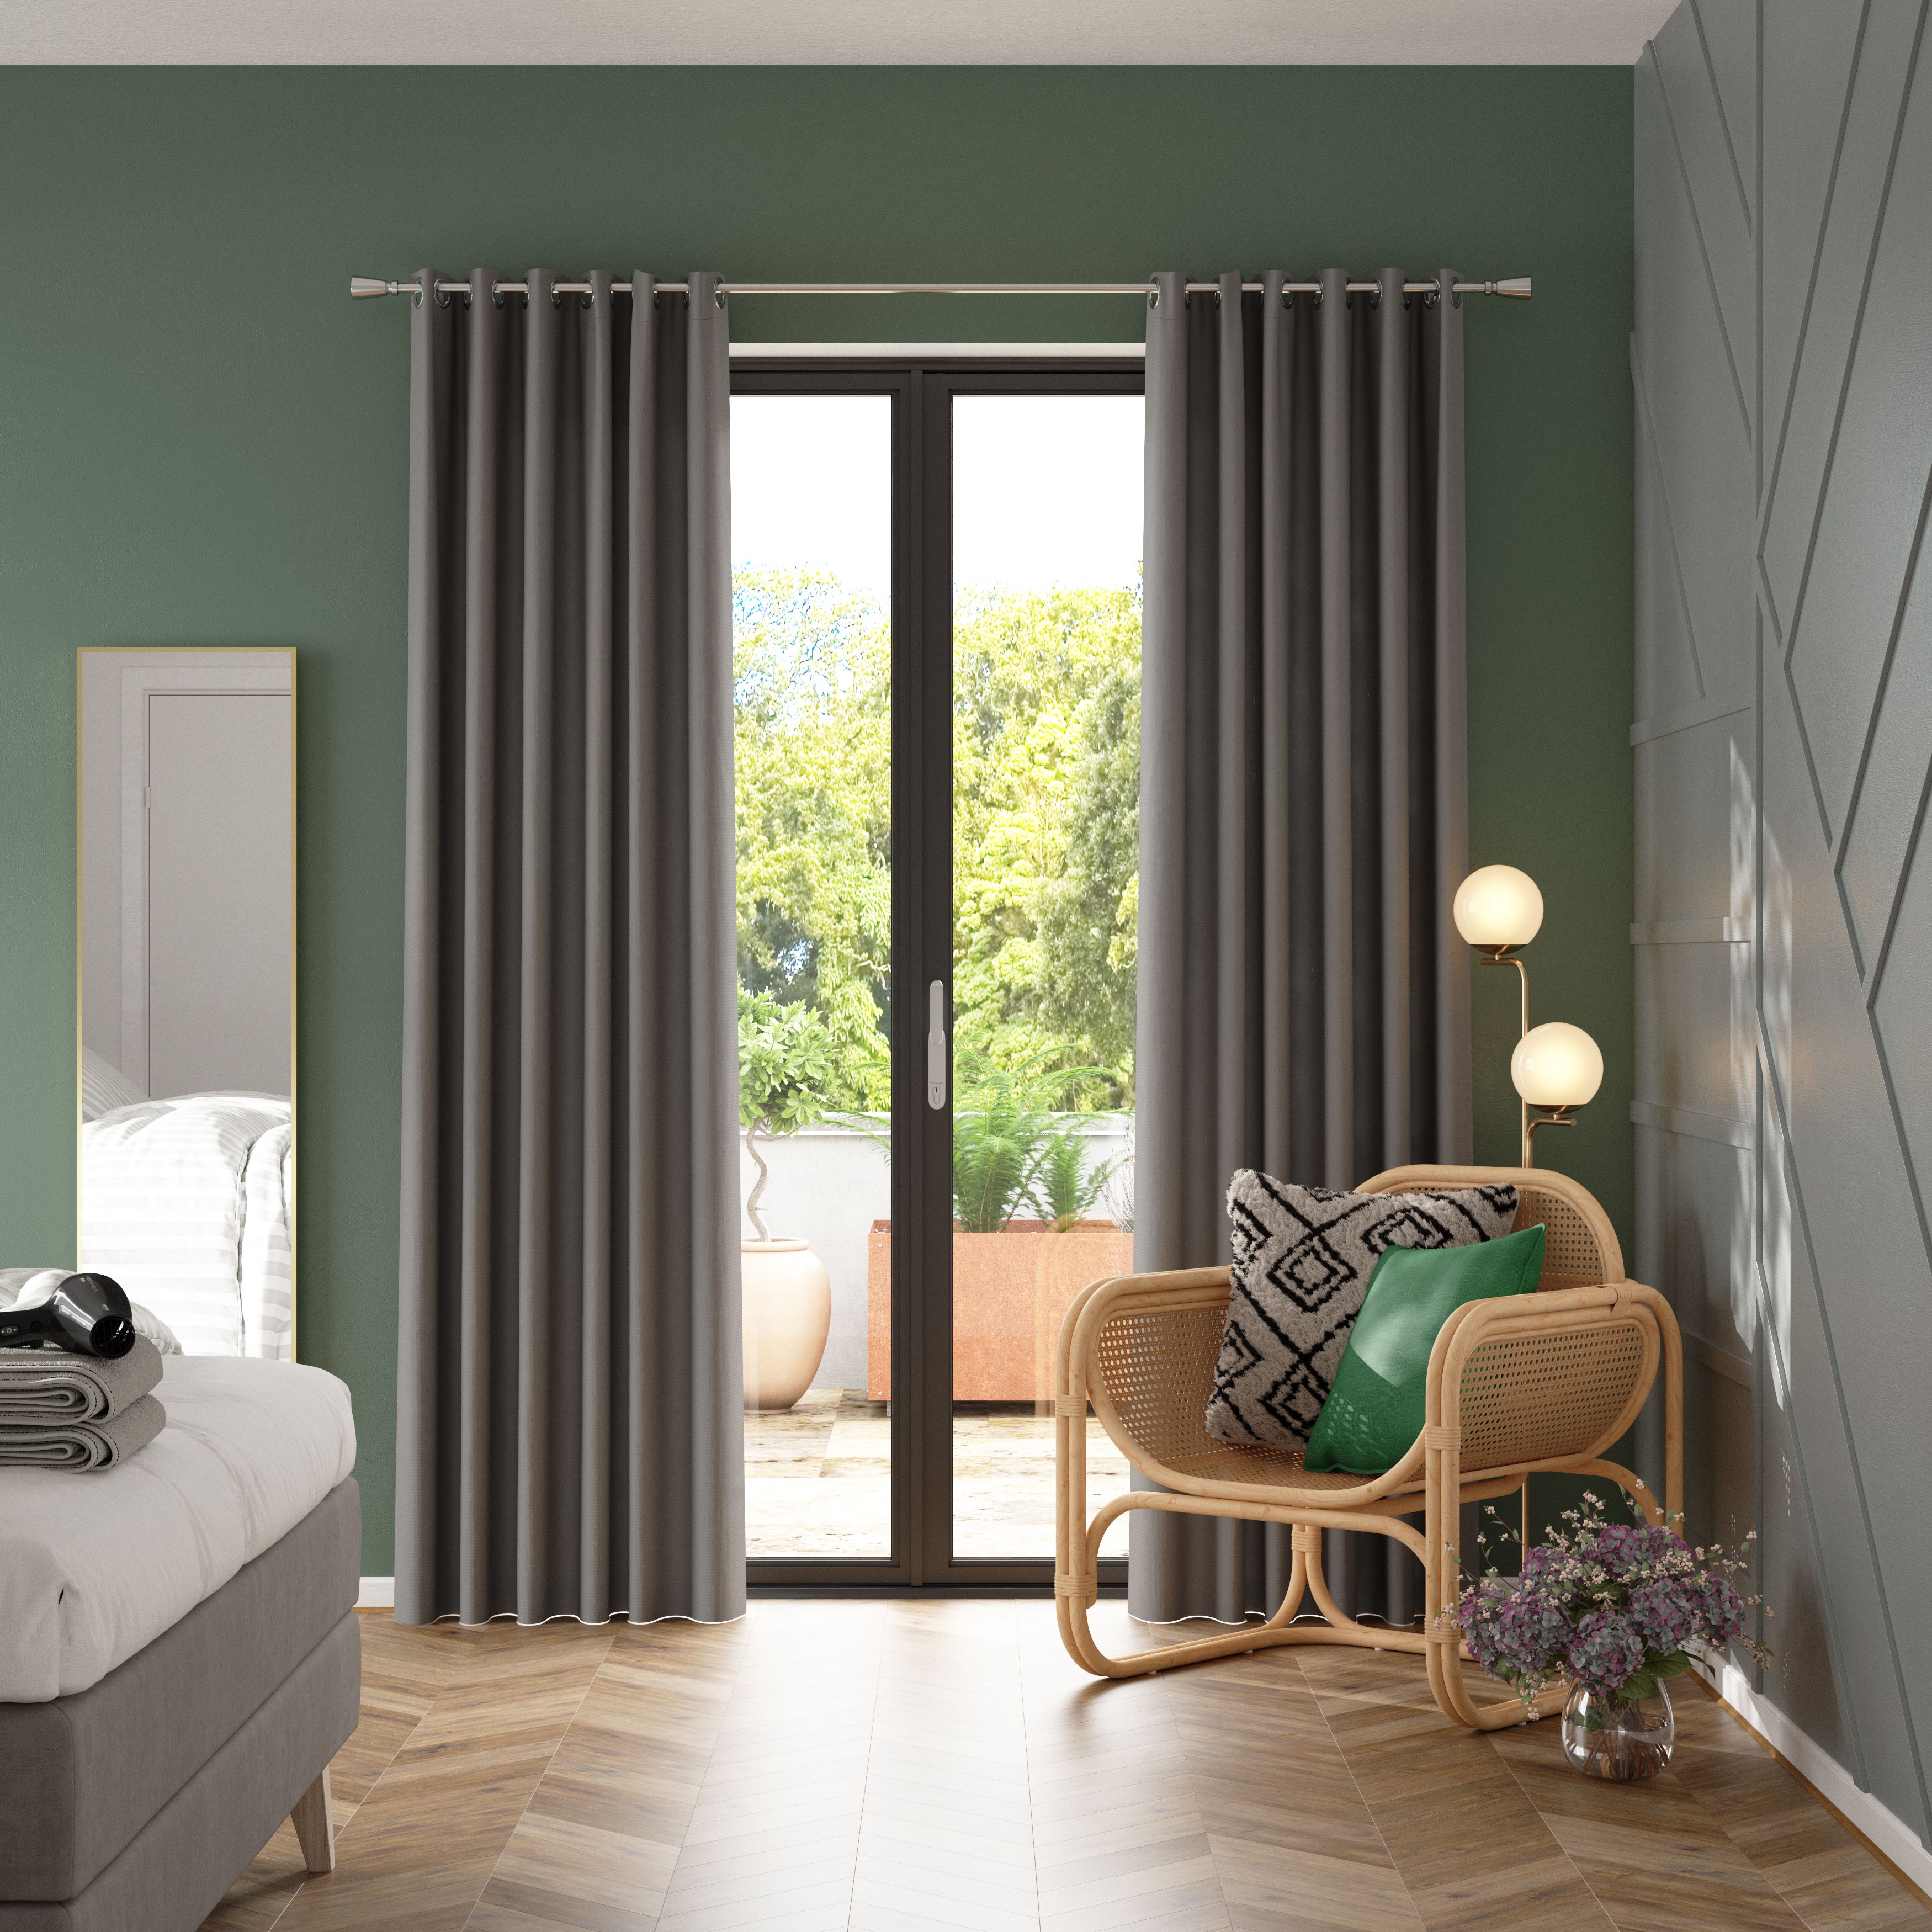 Glend Grey Plain woven Blackout & thermal Eyelet Curtain (W)228cm (L)228cm, Pair